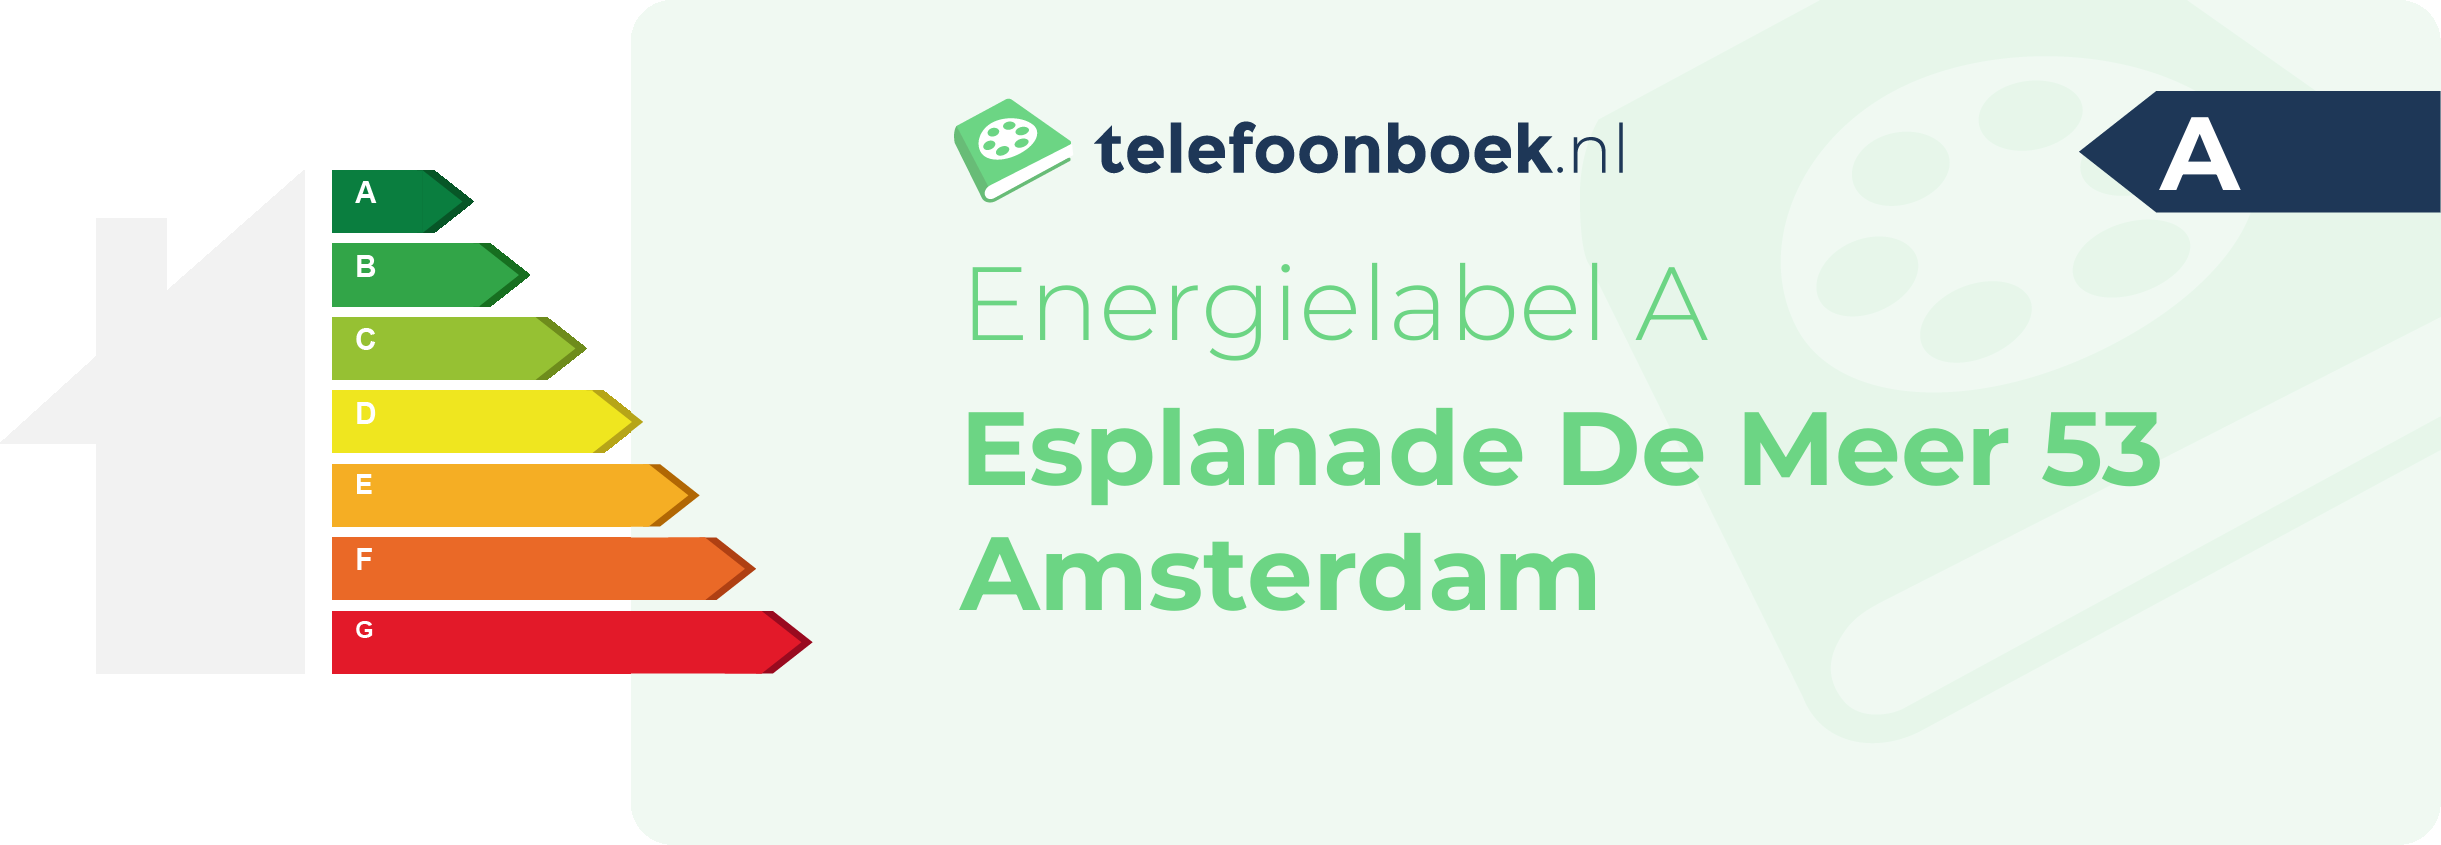 Energielabel Esplanade De Meer 53 Amsterdam